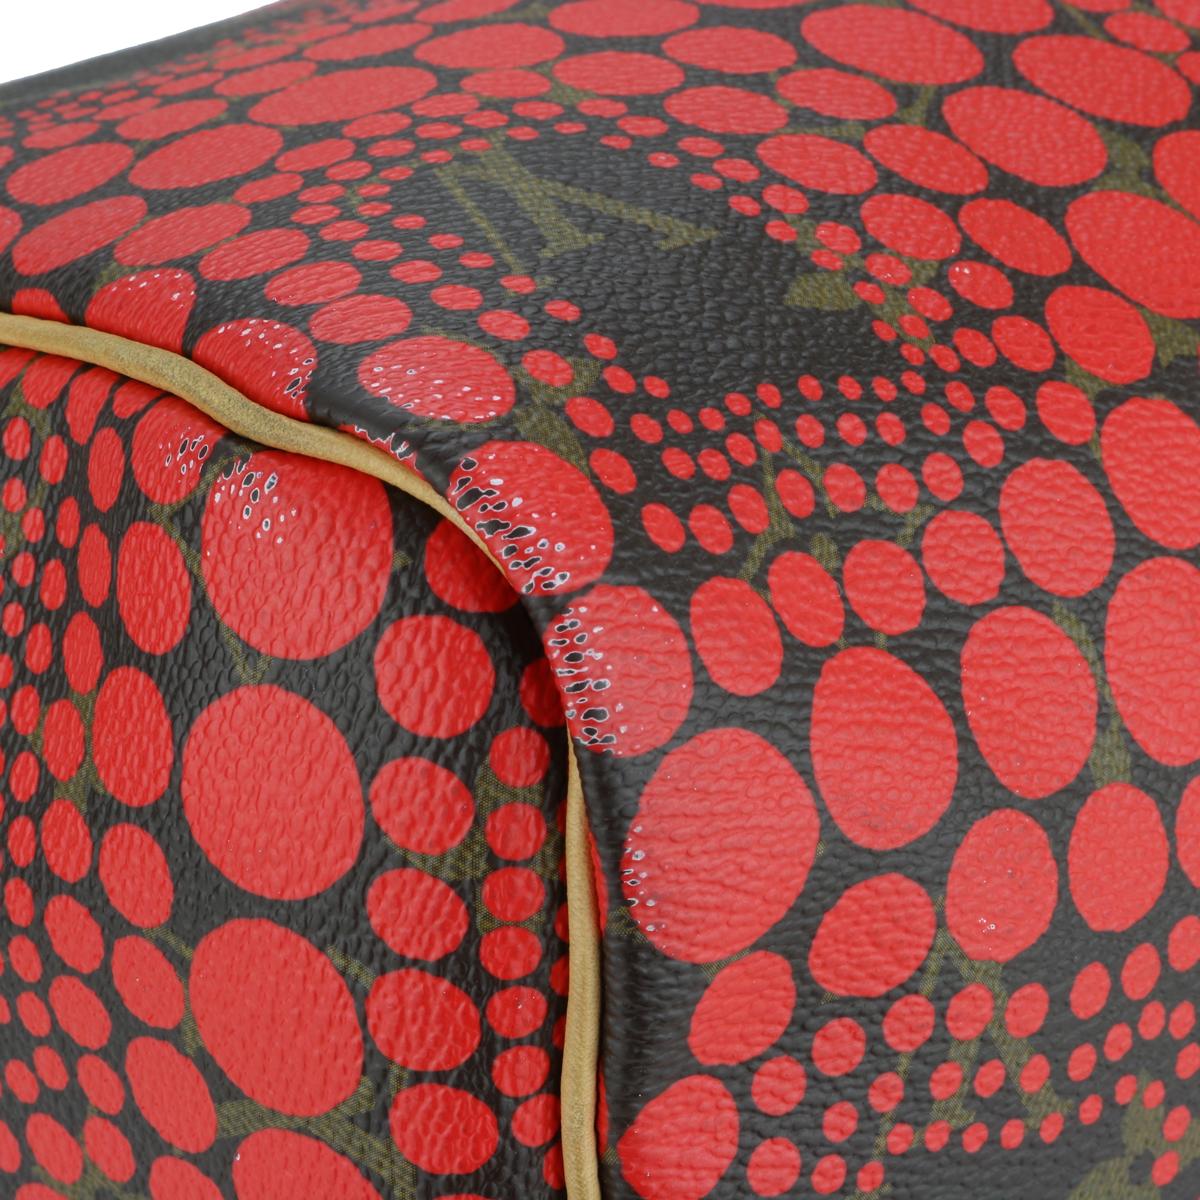 Louis Vuitton Speedy 30 Bag Yayoi Kusama Monogram in Red Limited Edition 2012 5